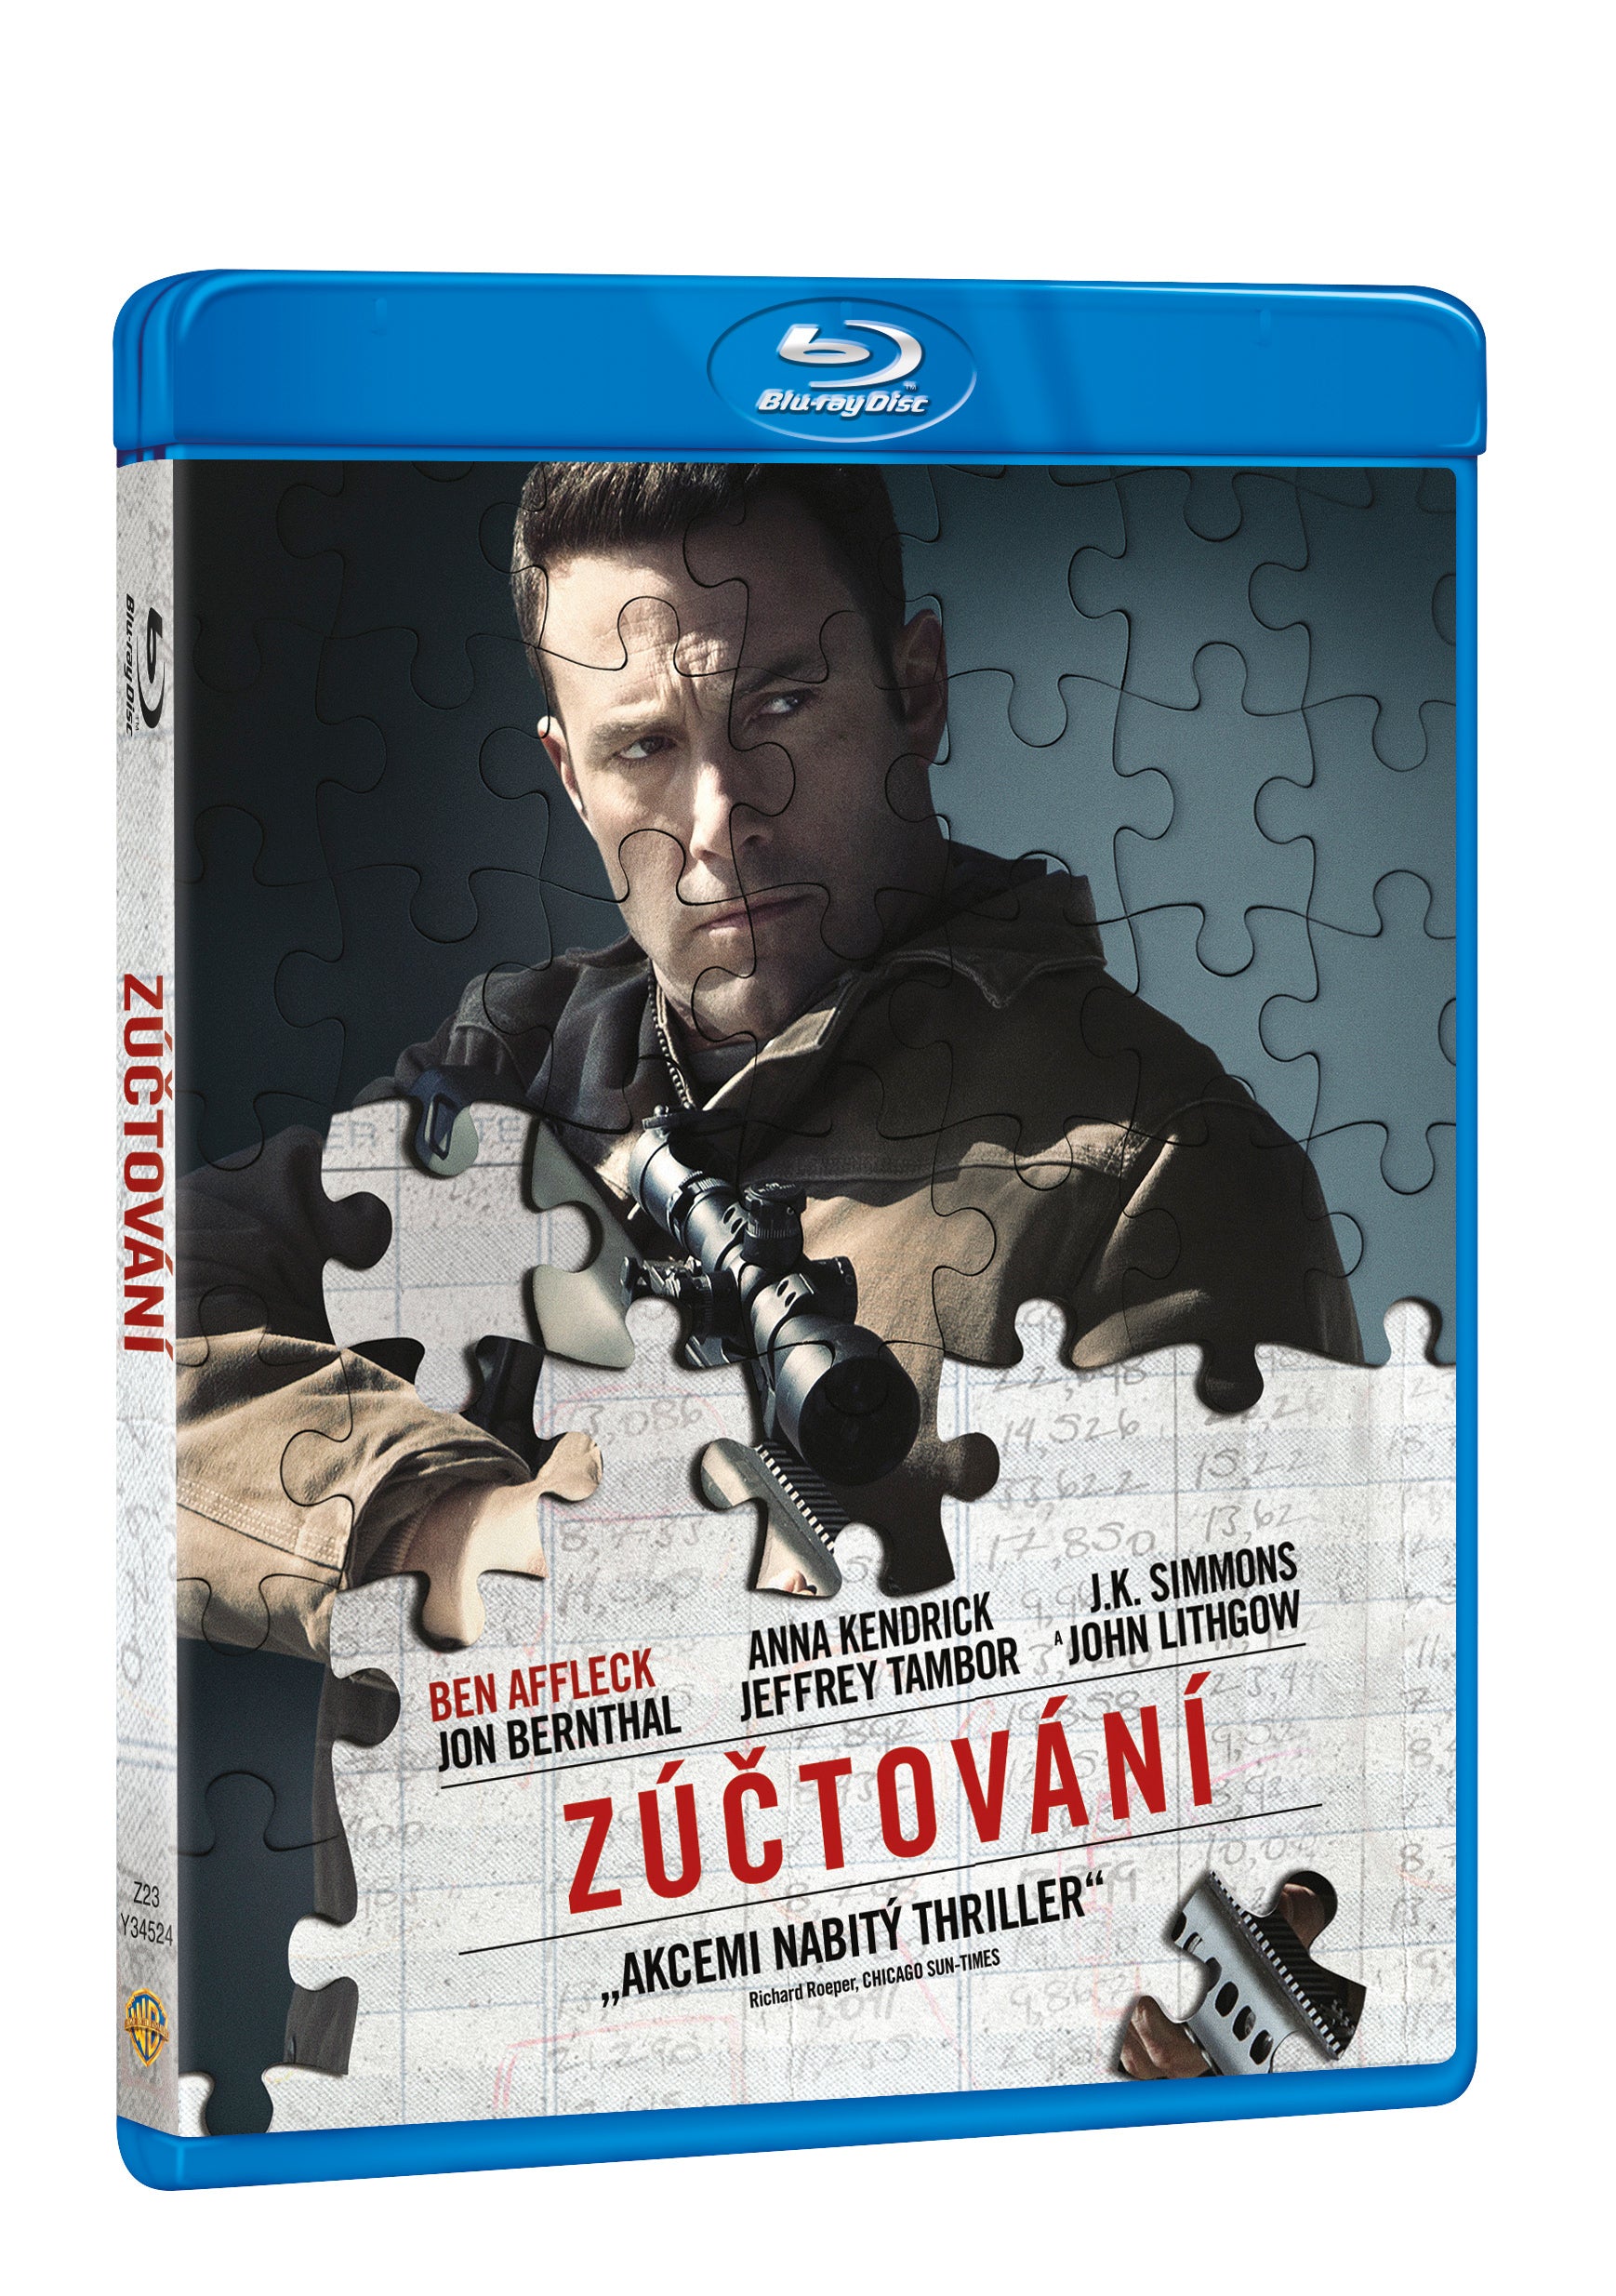 Zuctovani BD / The Accountant - Czech version